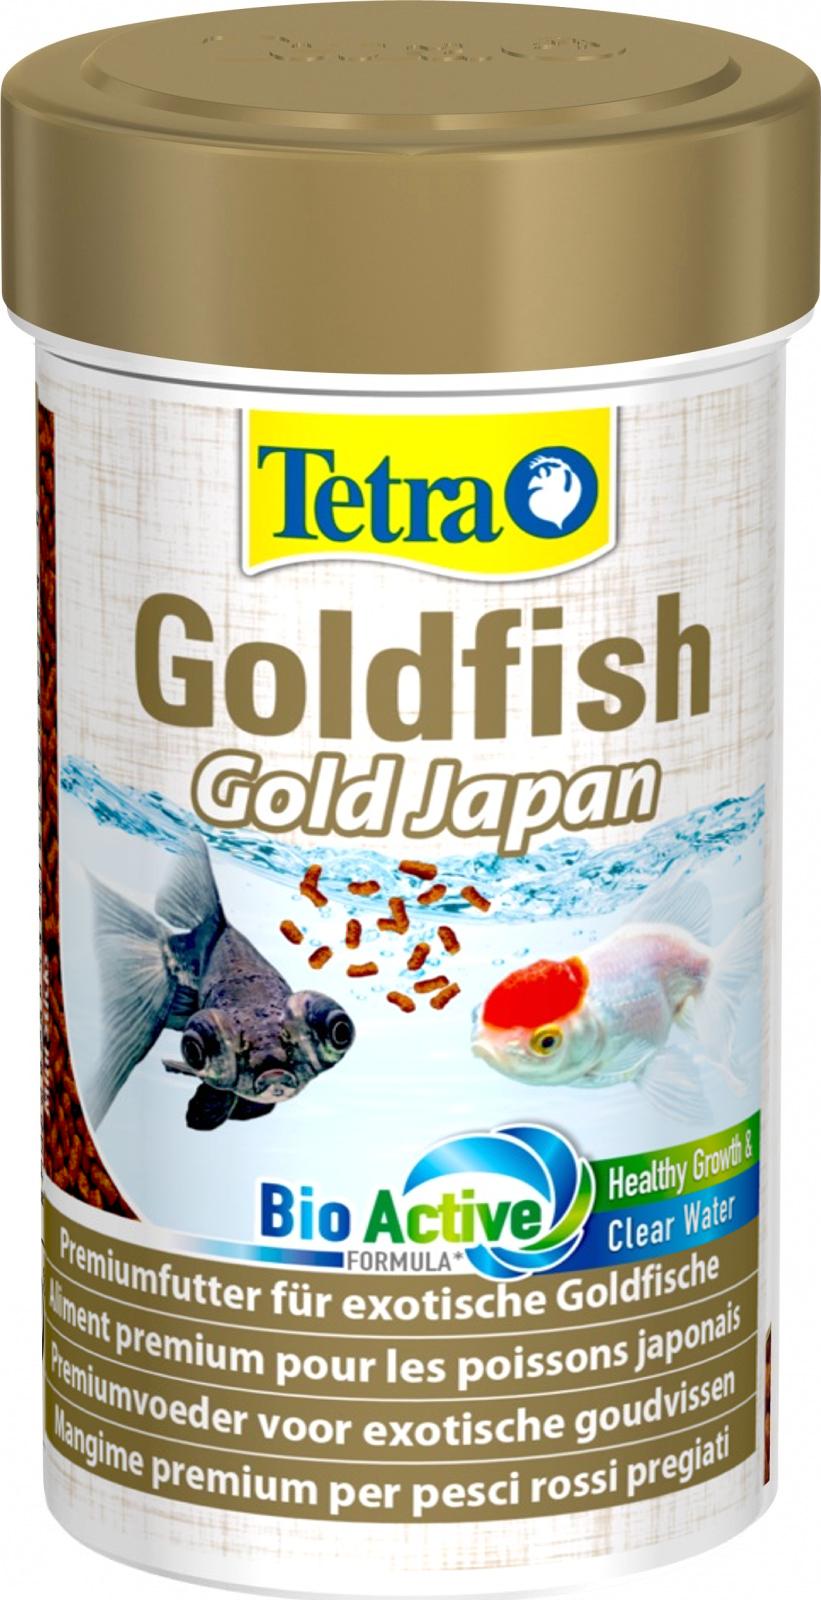 Alimentation Tetra Rubin granulés 250 ml pour poissons